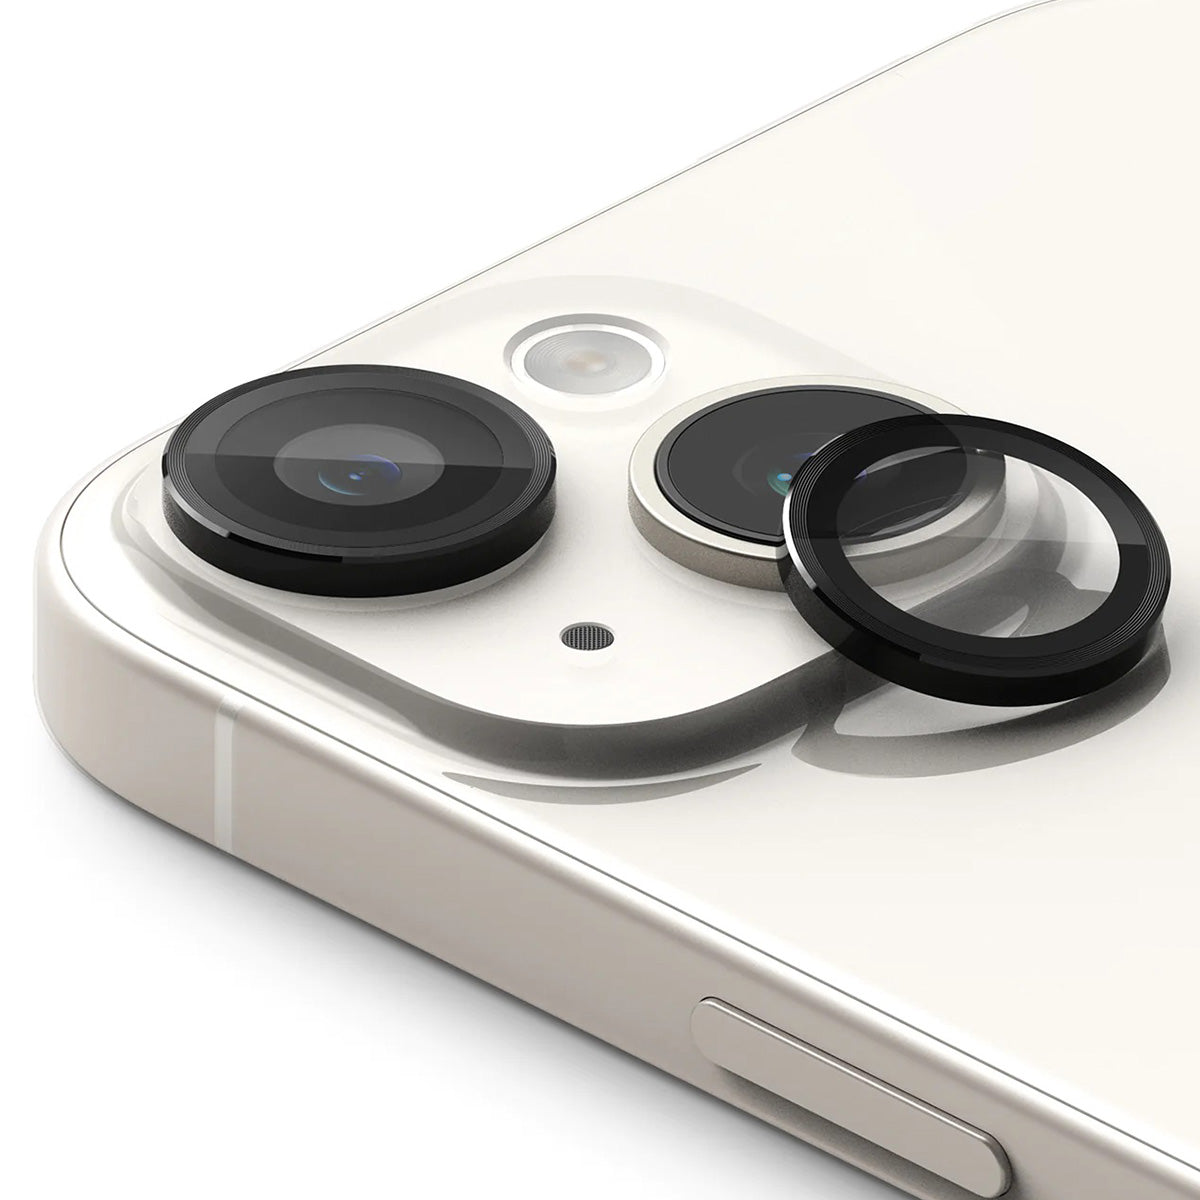 Ringke Camera Lens Frame Glass for iPhone 15 Series